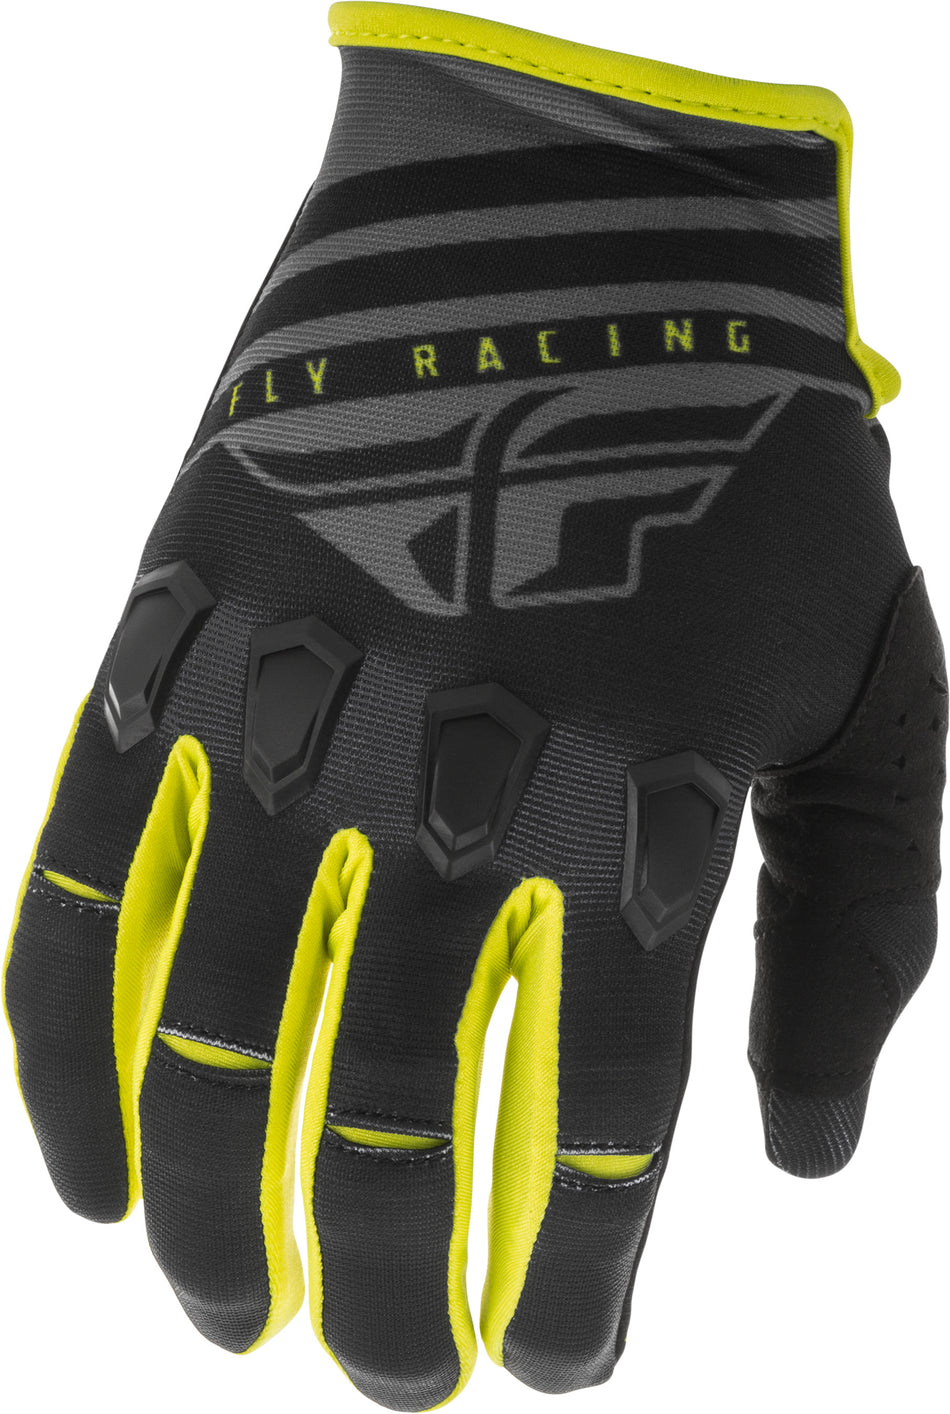 FLY RACING Kinetic K220 Gloves Black/Grey/Hi-Vis Sz 06 373-51506